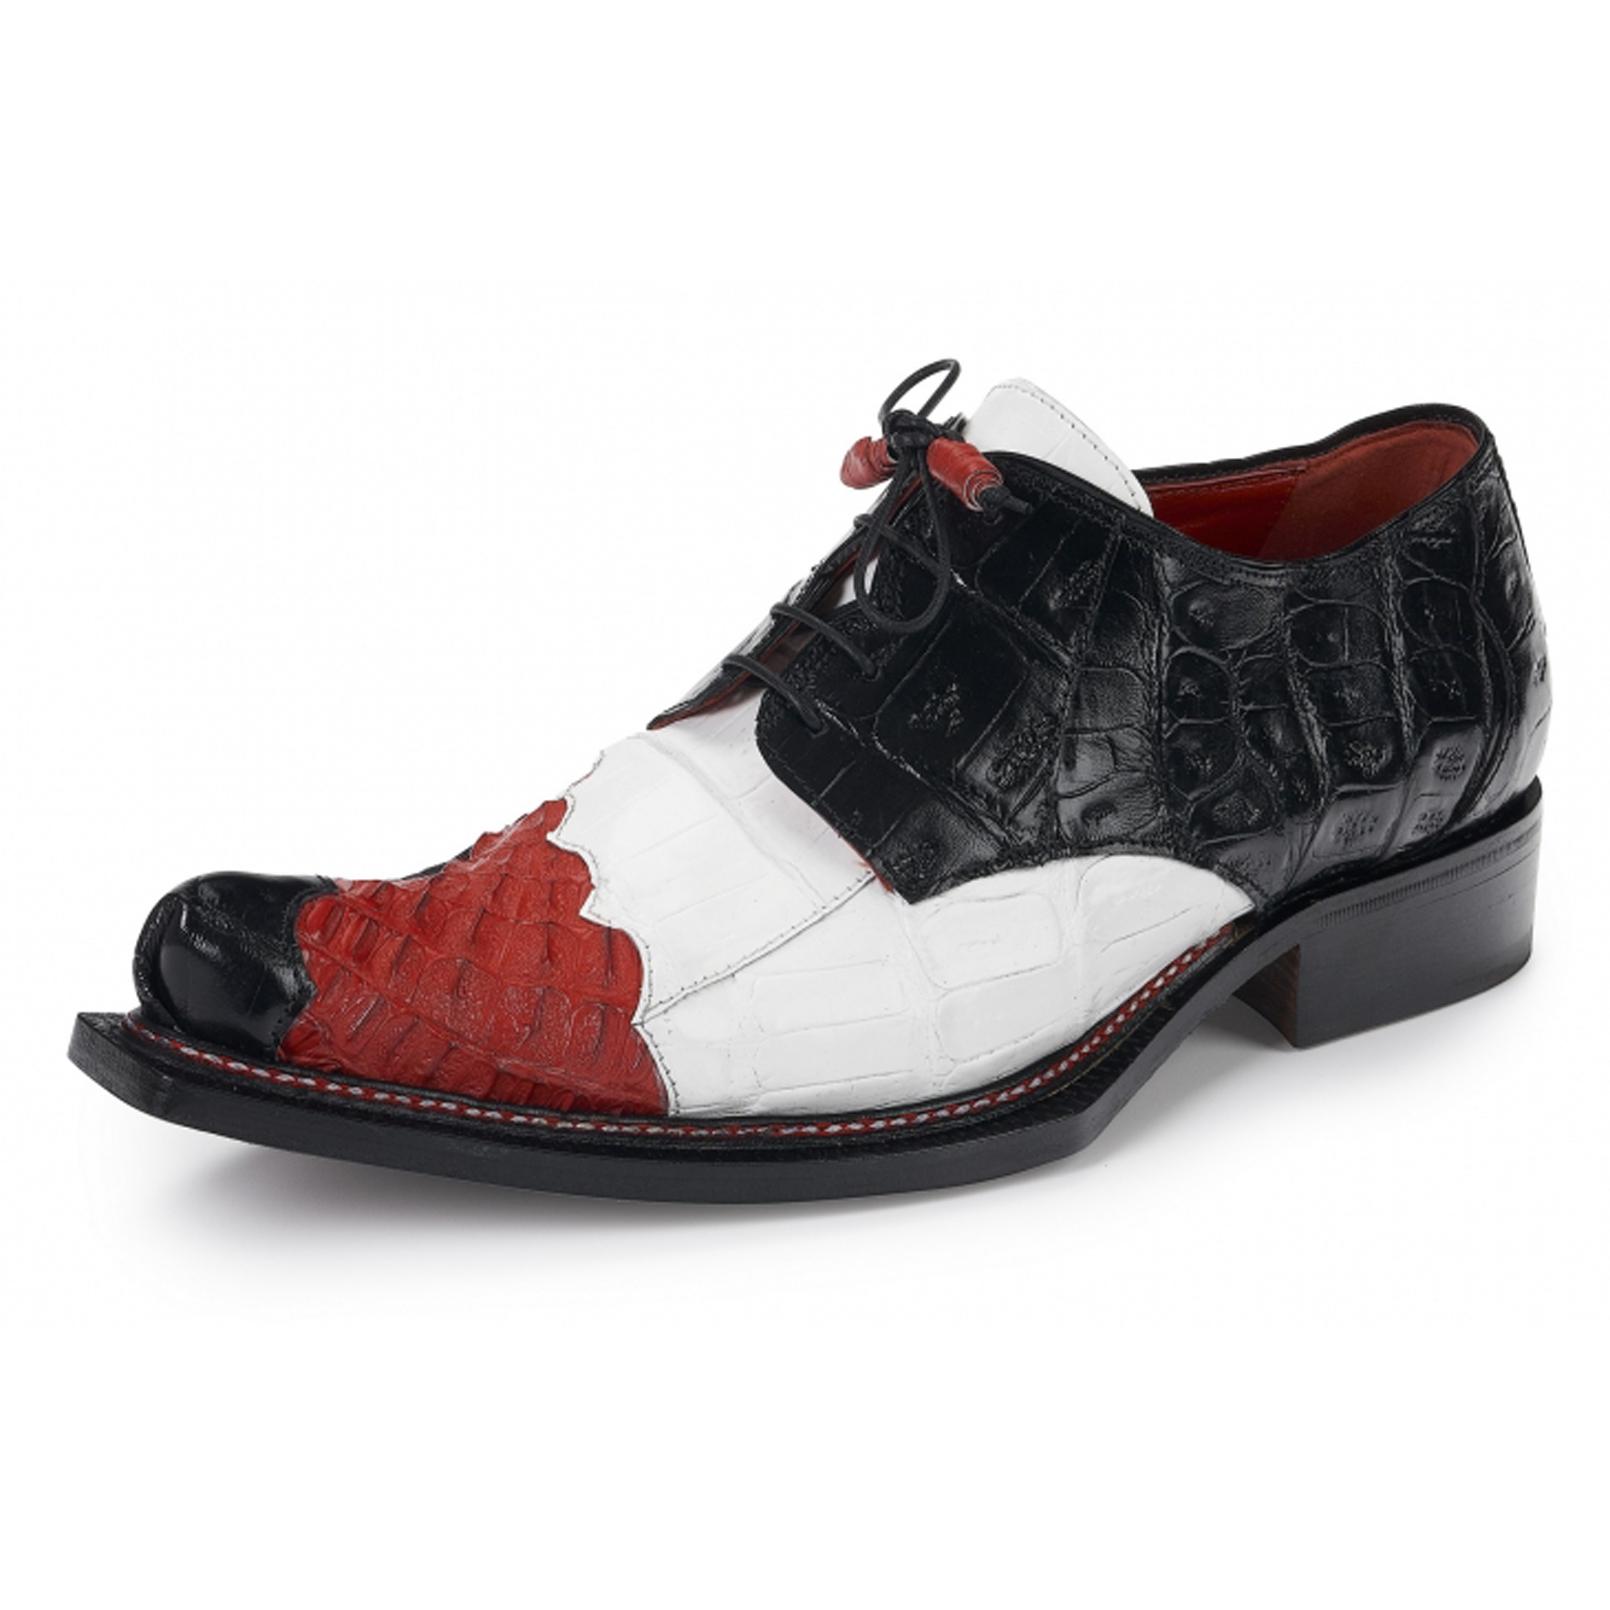 Bror Lav en snemand Jonglere Mauri ''Plave'' 44207 Red / Black / White Genuine Hornback / Baby Crocodile  Shoes. - $1,449.90 :: Upscale Menswear - UpscaleMenswear.com